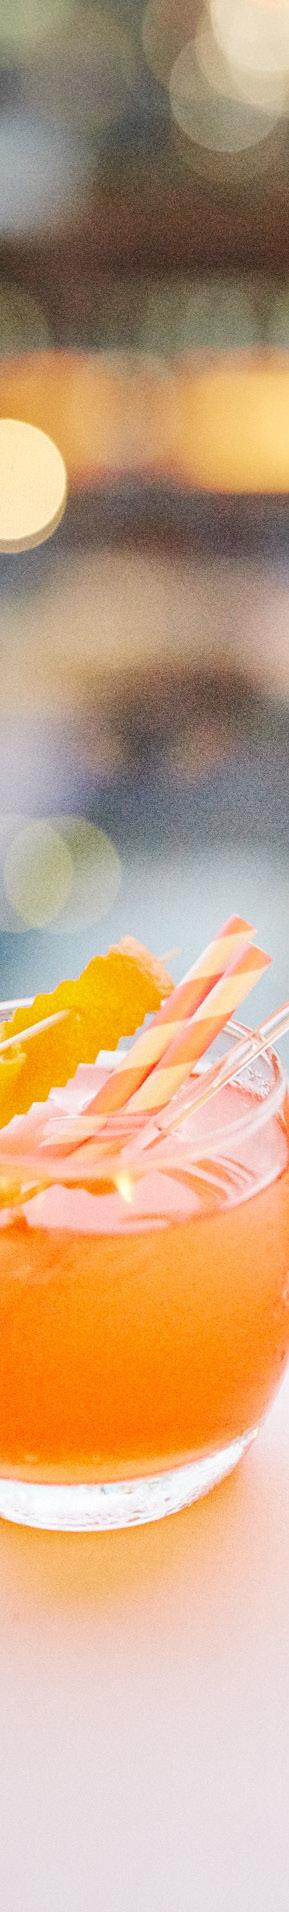 SOMMELIER PACKAGE - MOCKTAIL LANGHAM SUNRISE Orange, pineapple, mango juice, lemonade & grenadine PINEAPPLE PERSUASION Pineapple, orange, lemon juice, banana &